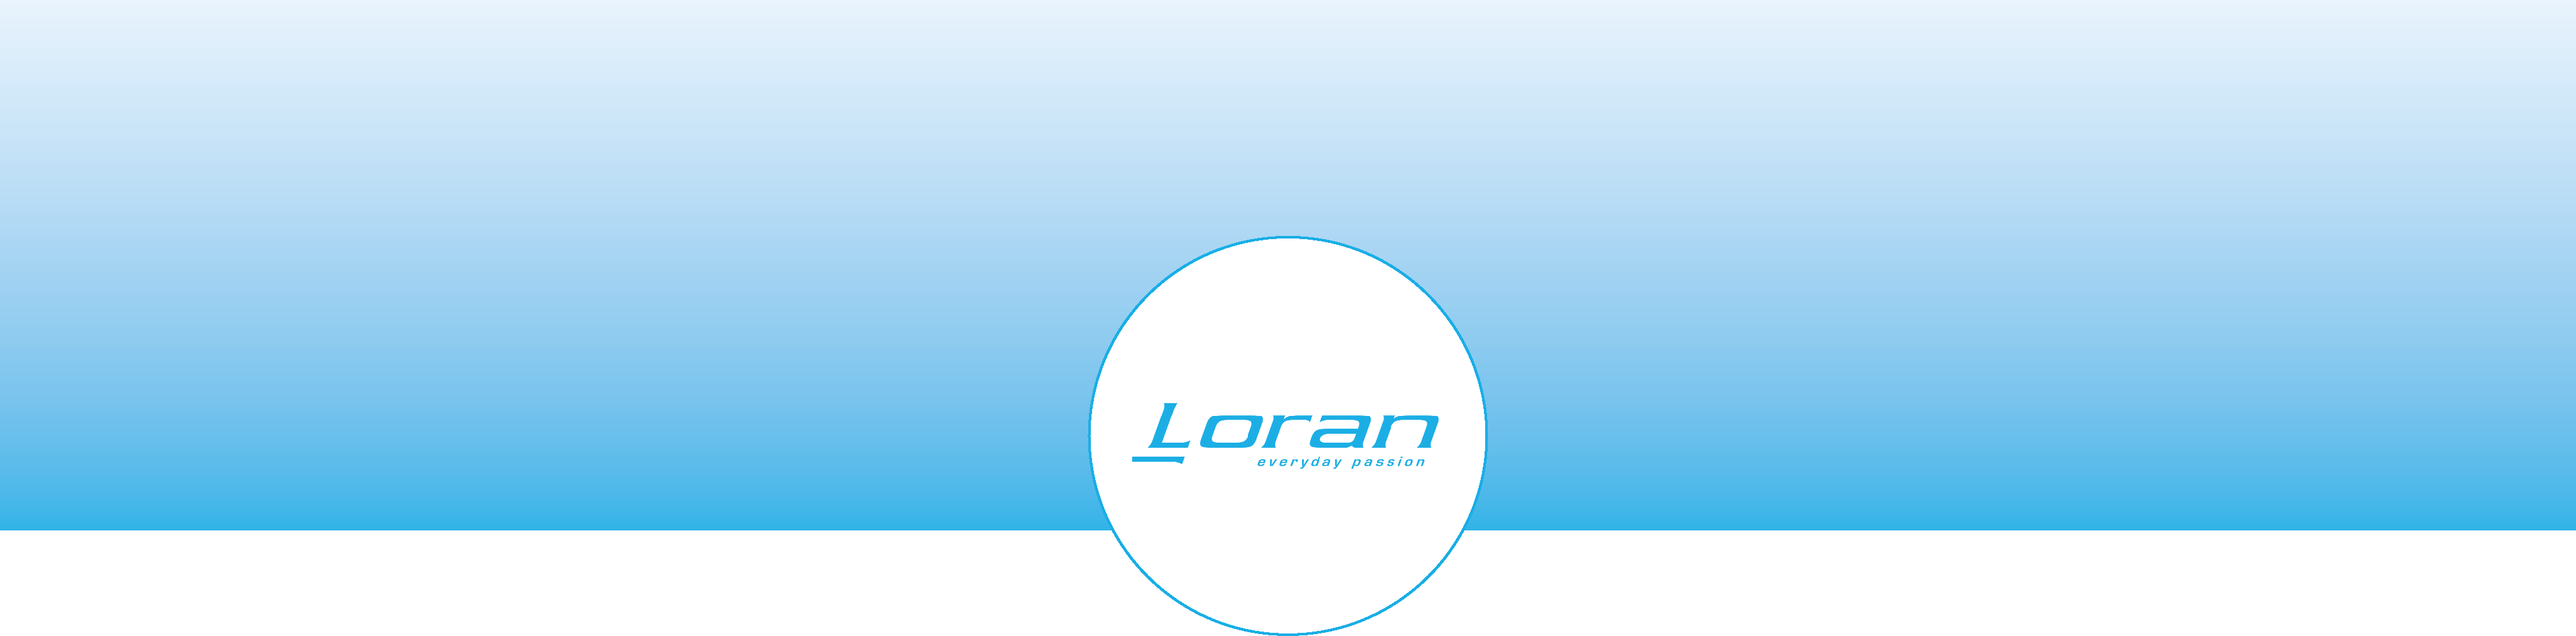 banner_loran